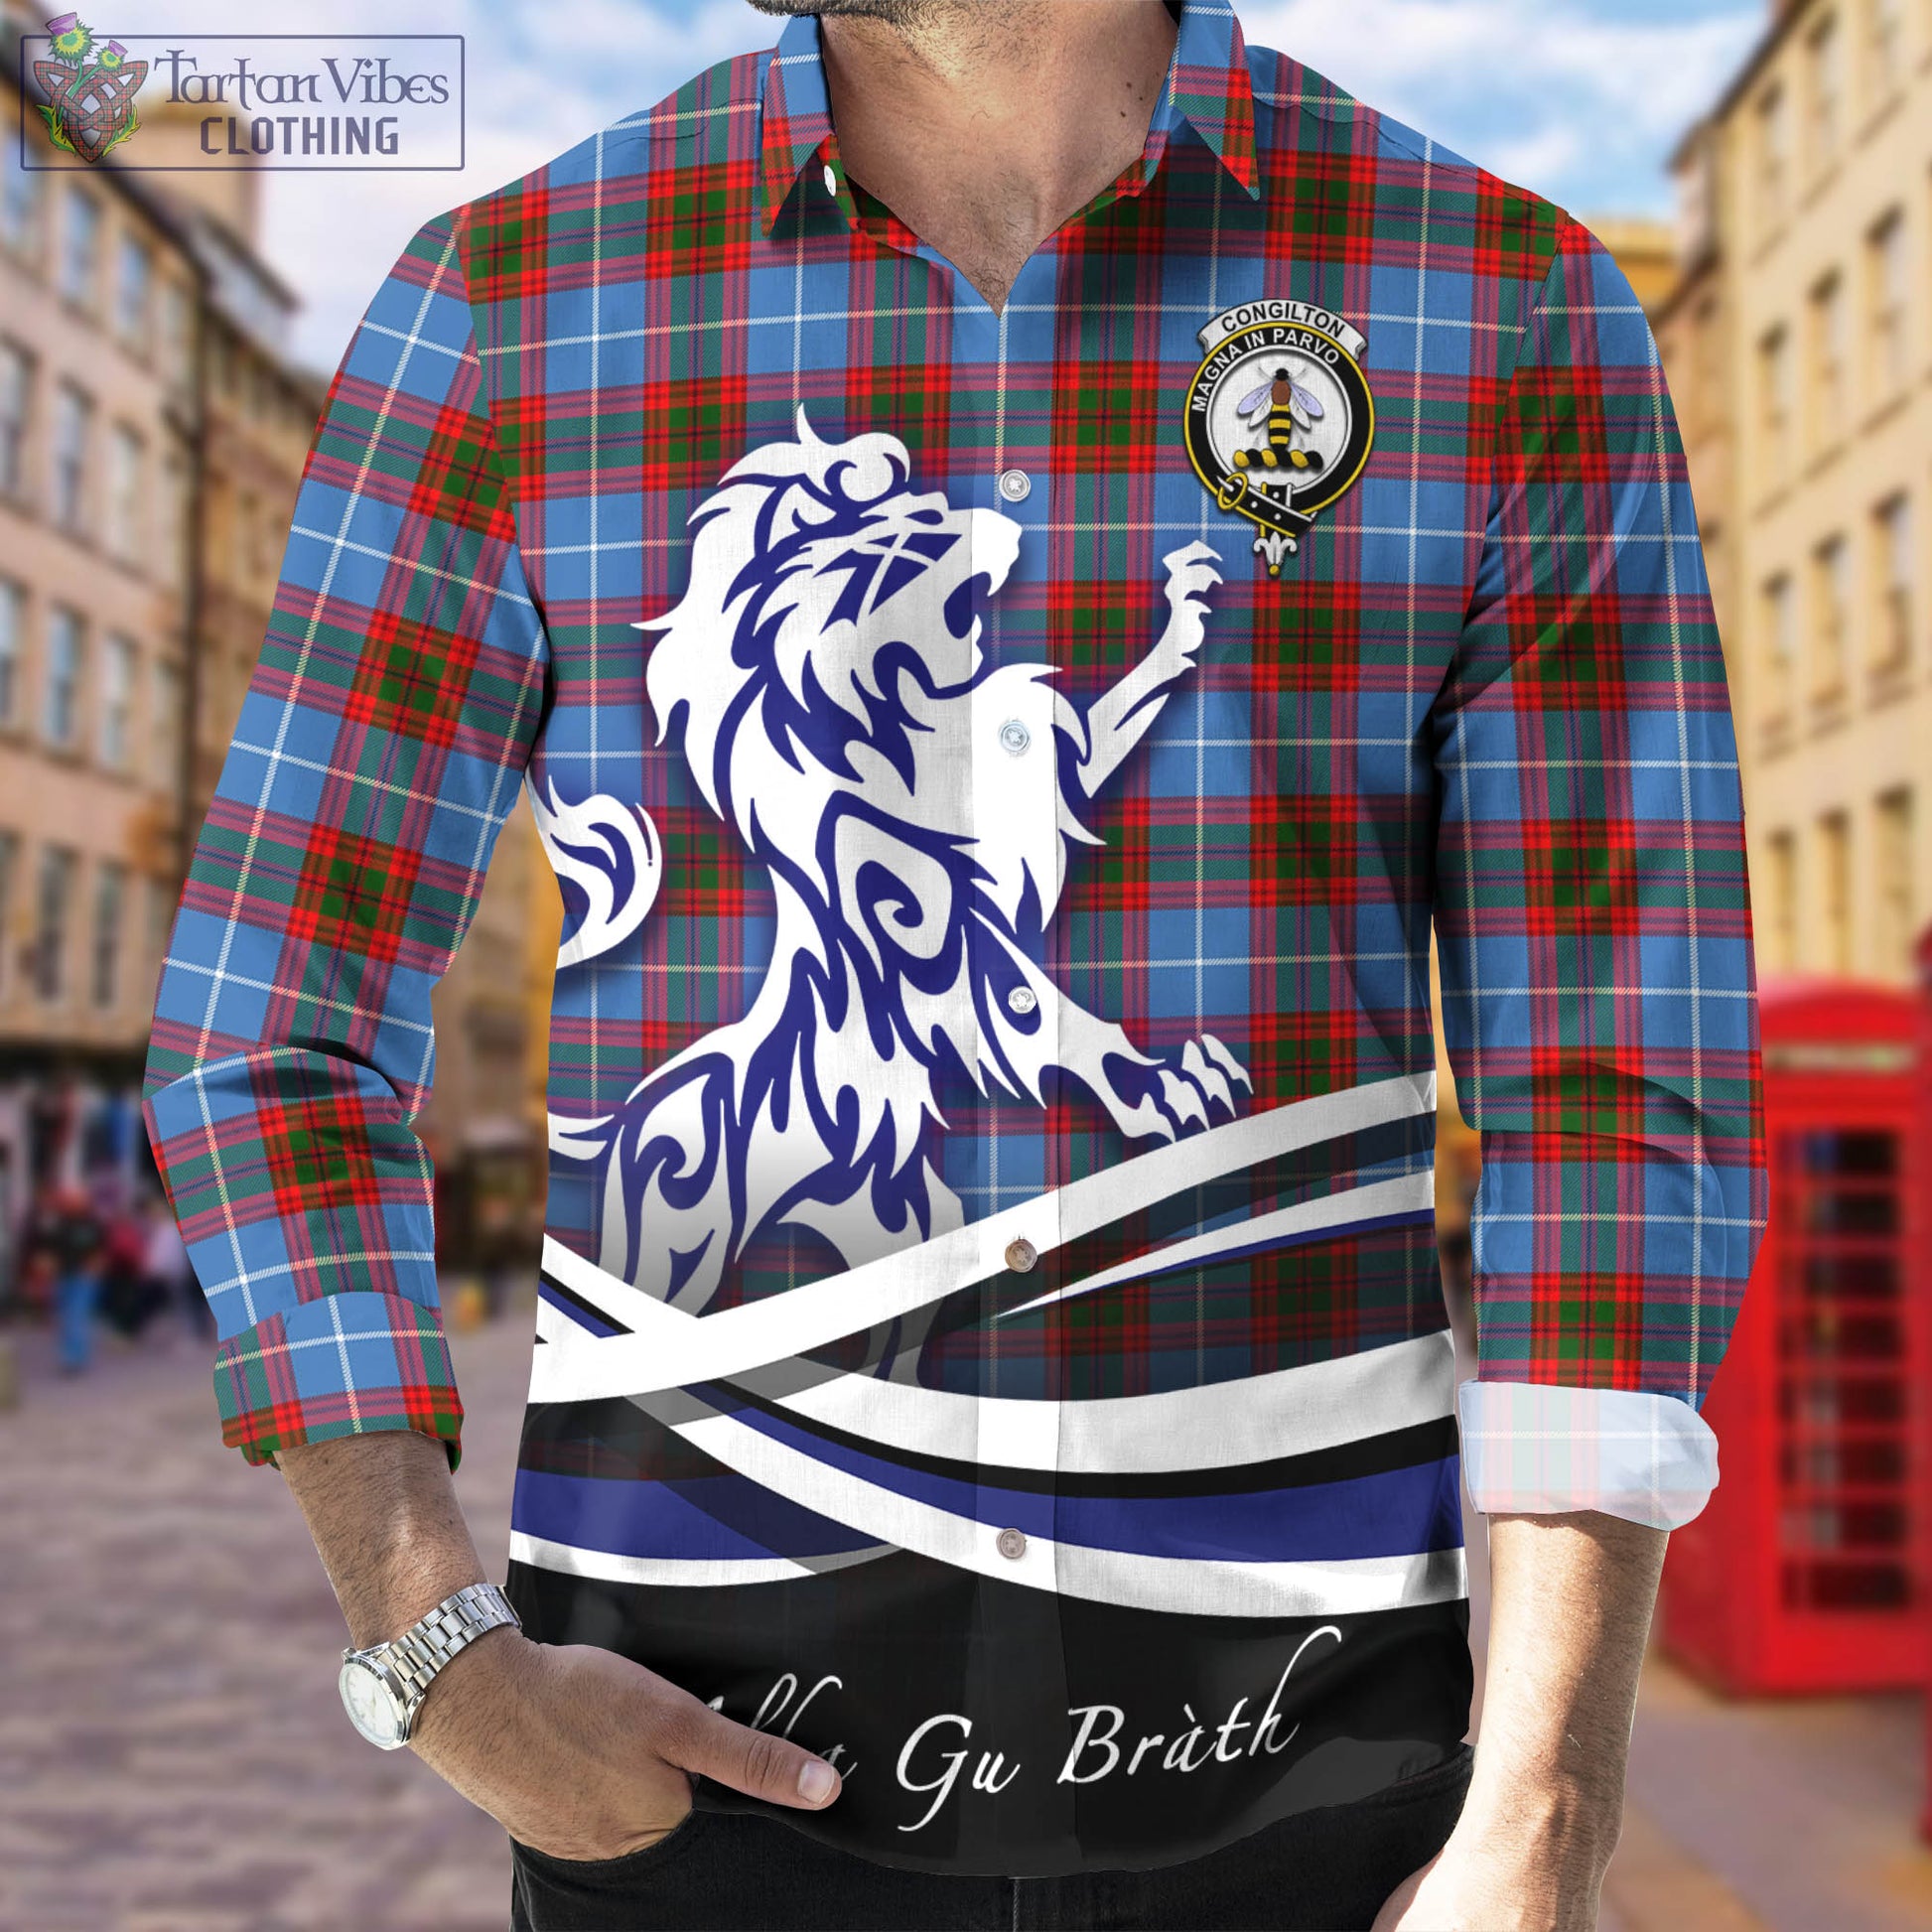 congilton-tartan-long-sleeve-button-up-shirt-with-alba-gu-brath-regal-lion-emblem